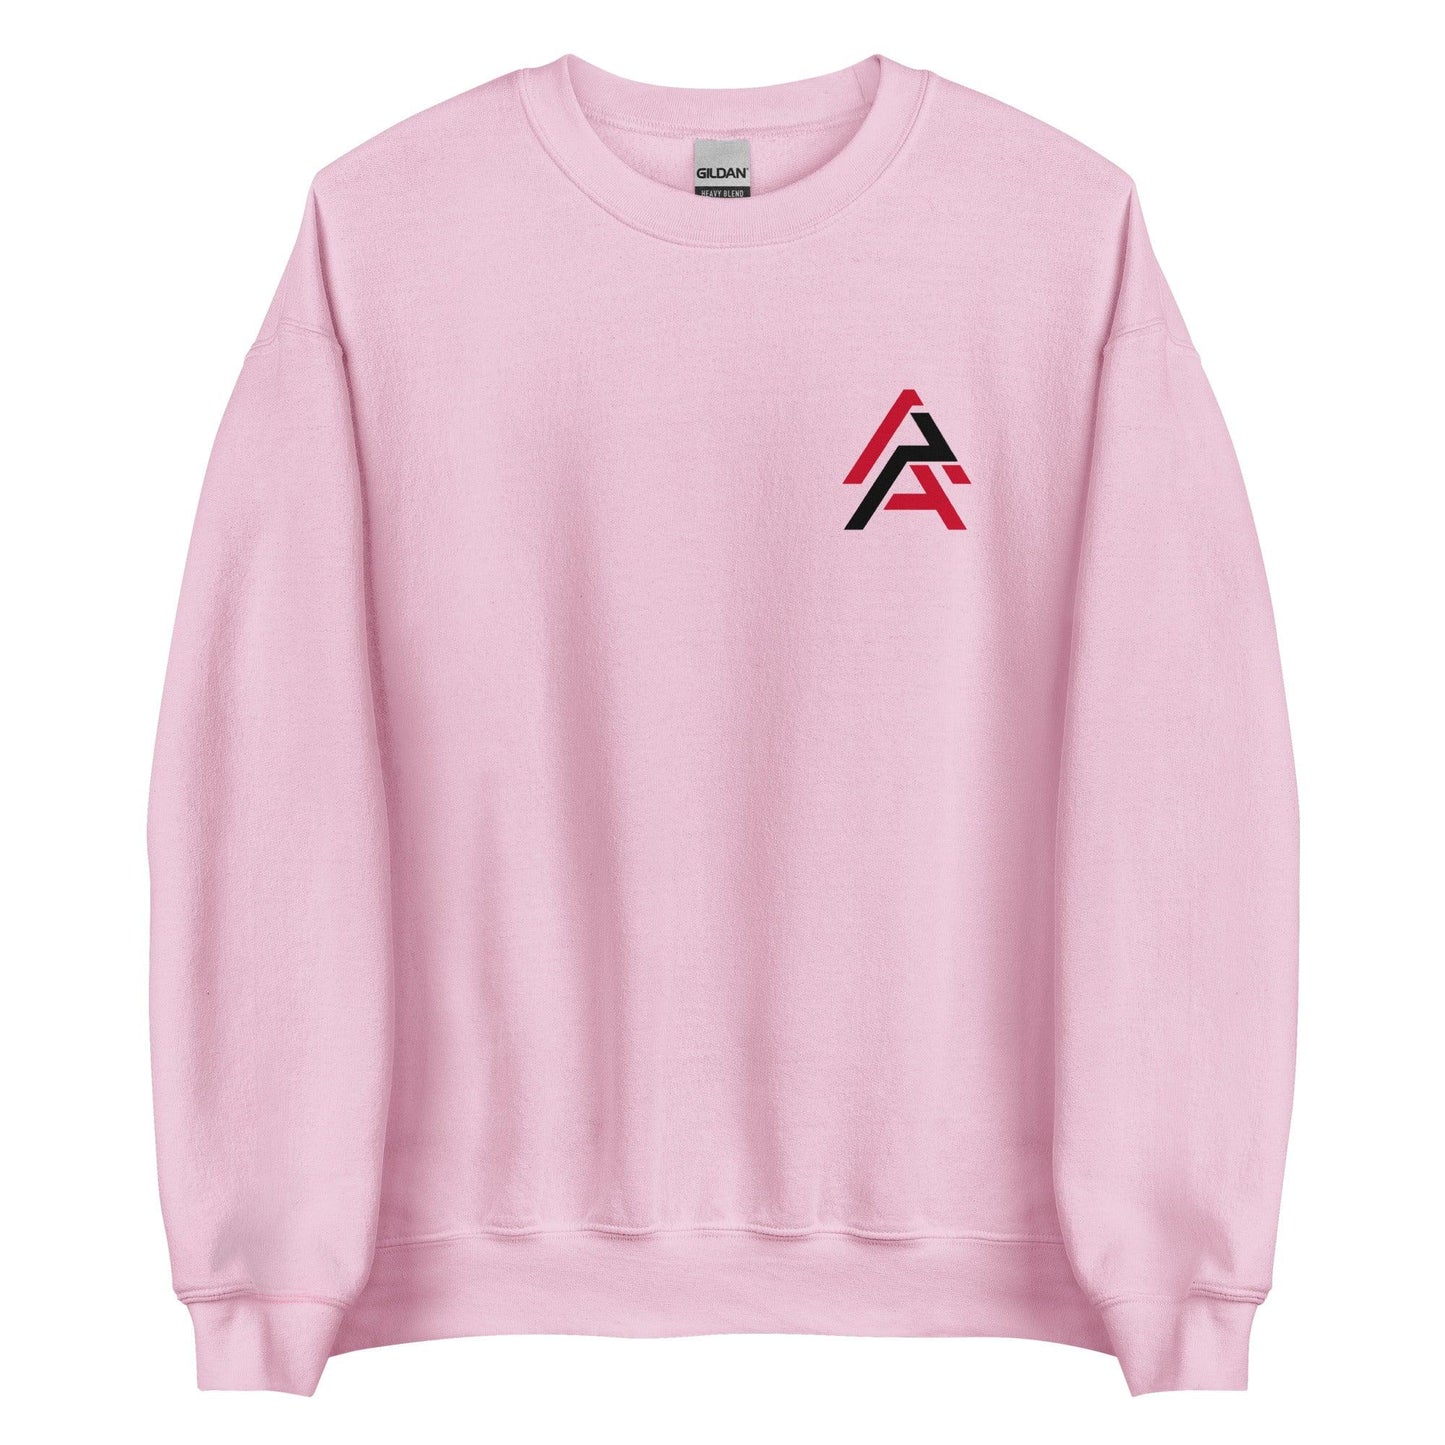 Anthony Alford “AA” Sweatshirt - Fan Arch